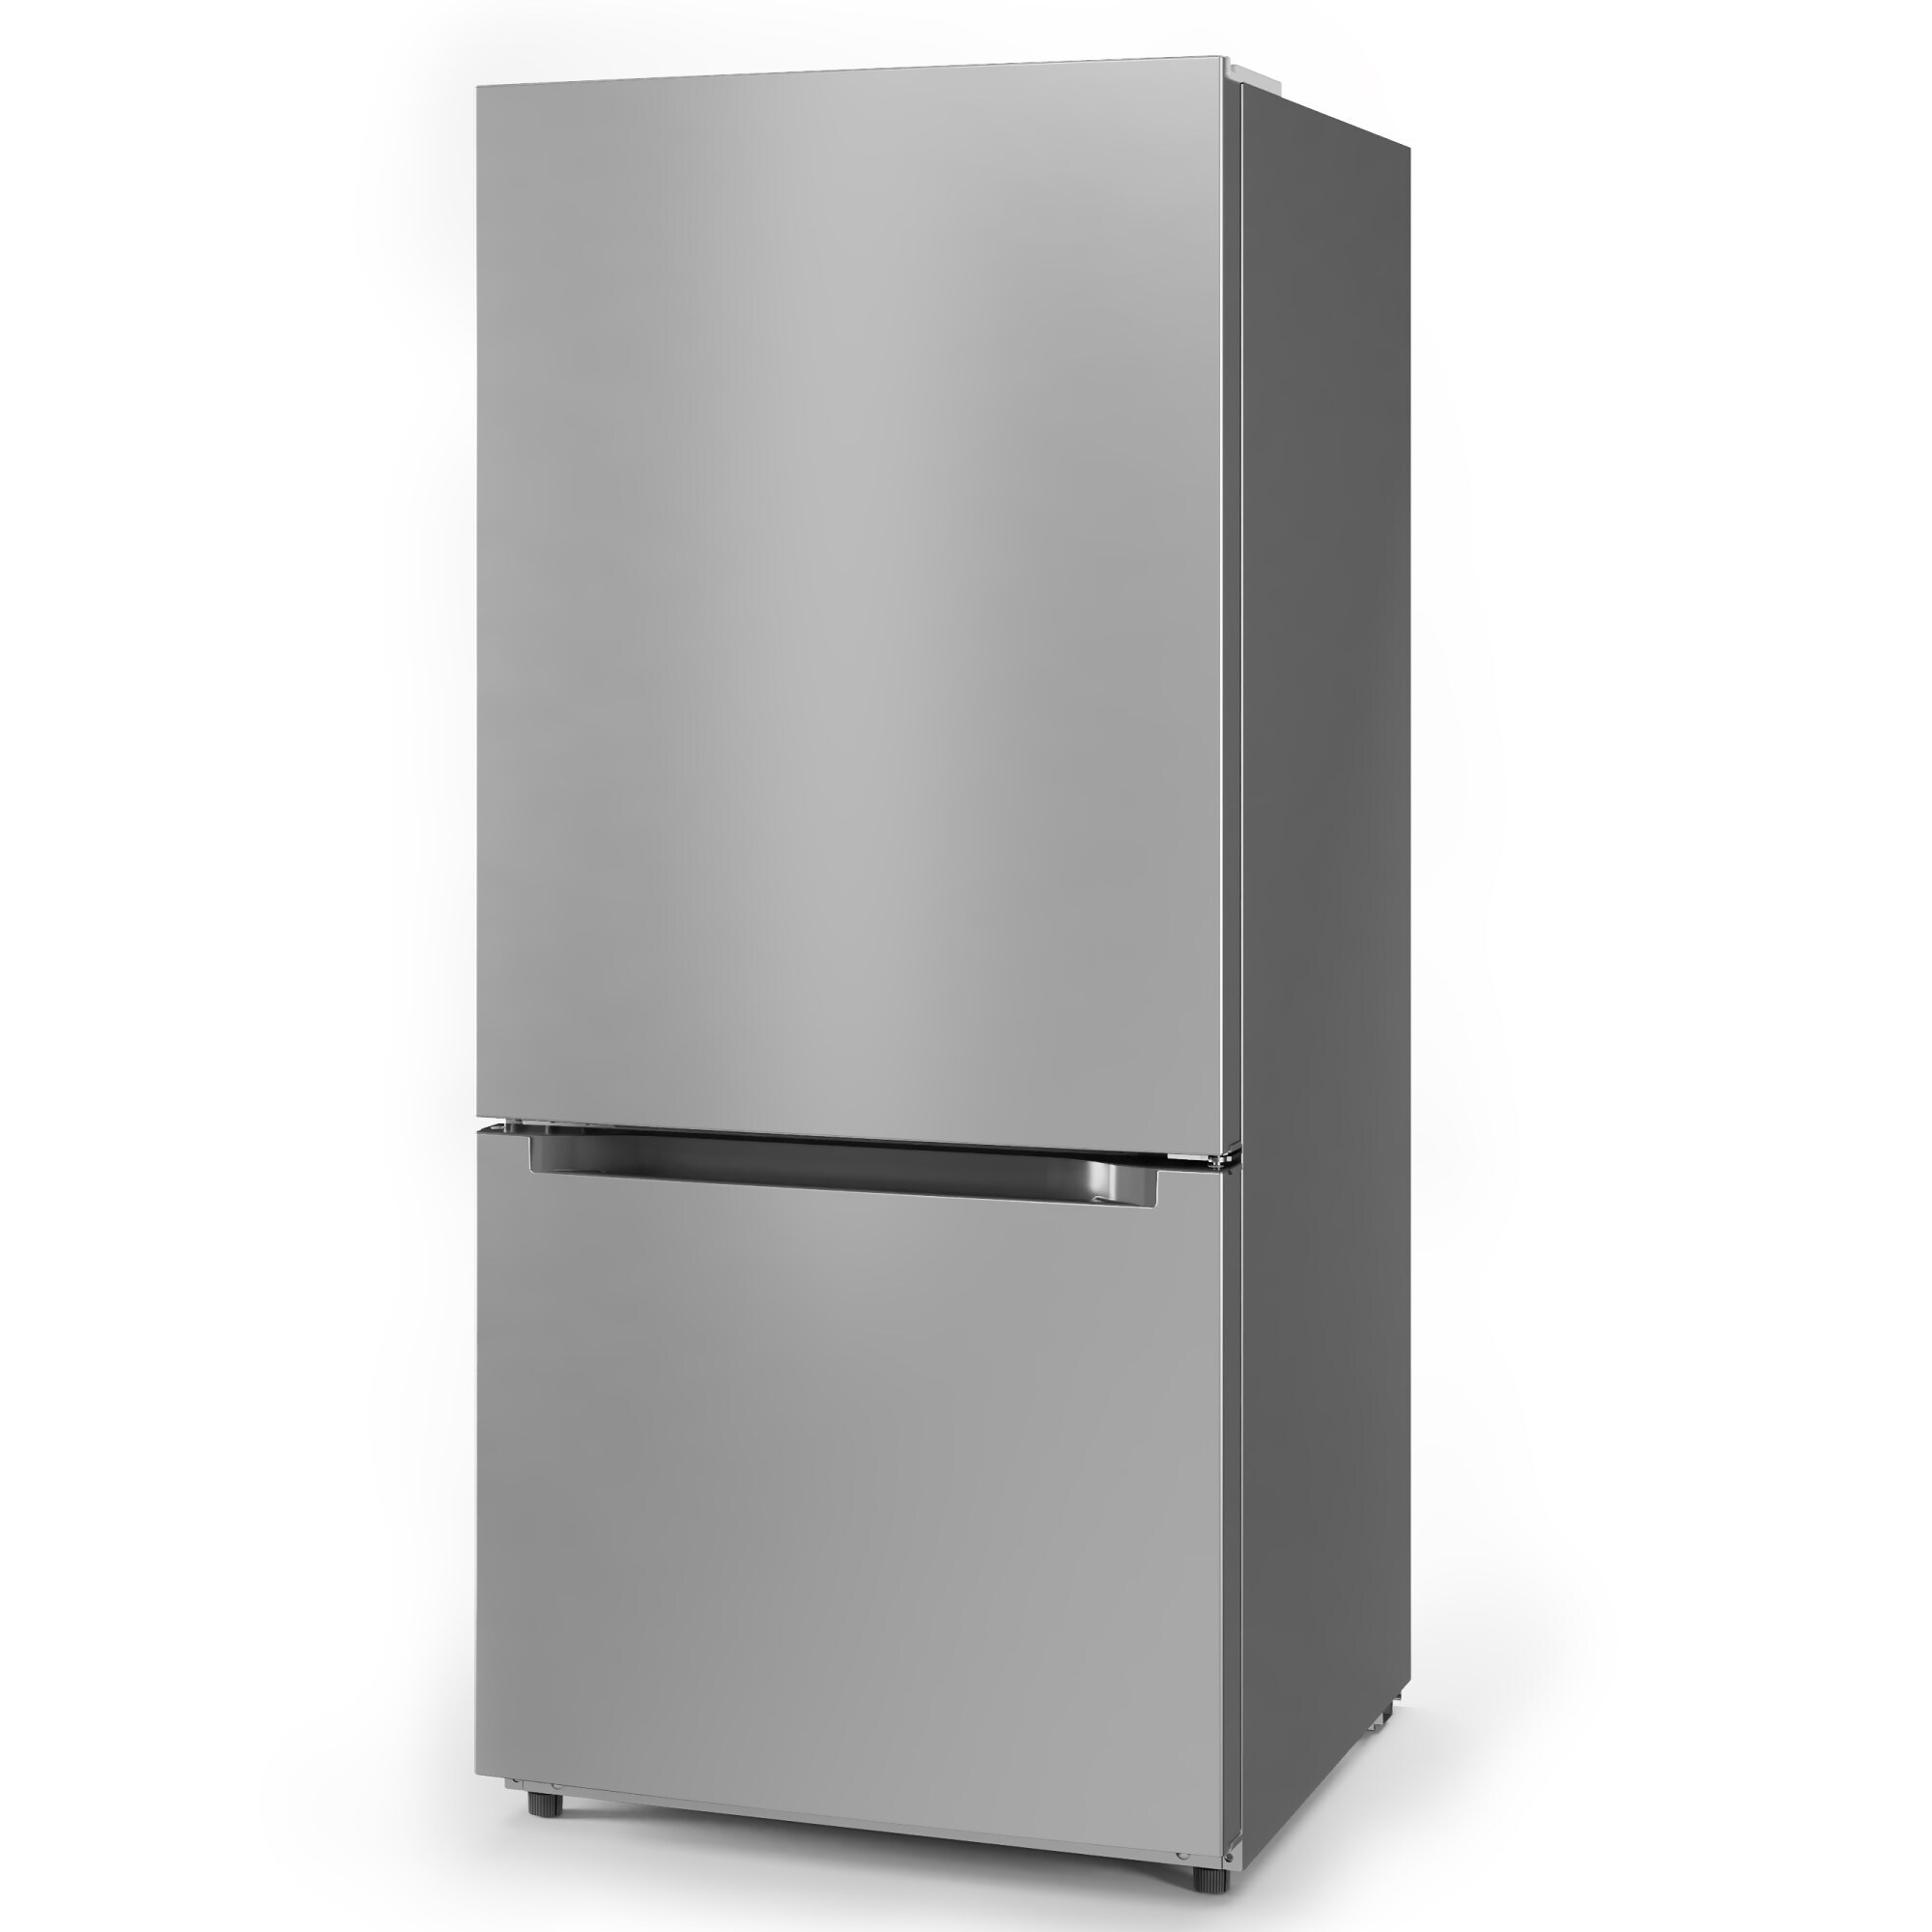 Midea 18.7-cu ft Bottom-Freezer Refrigerator (Stainless Steel